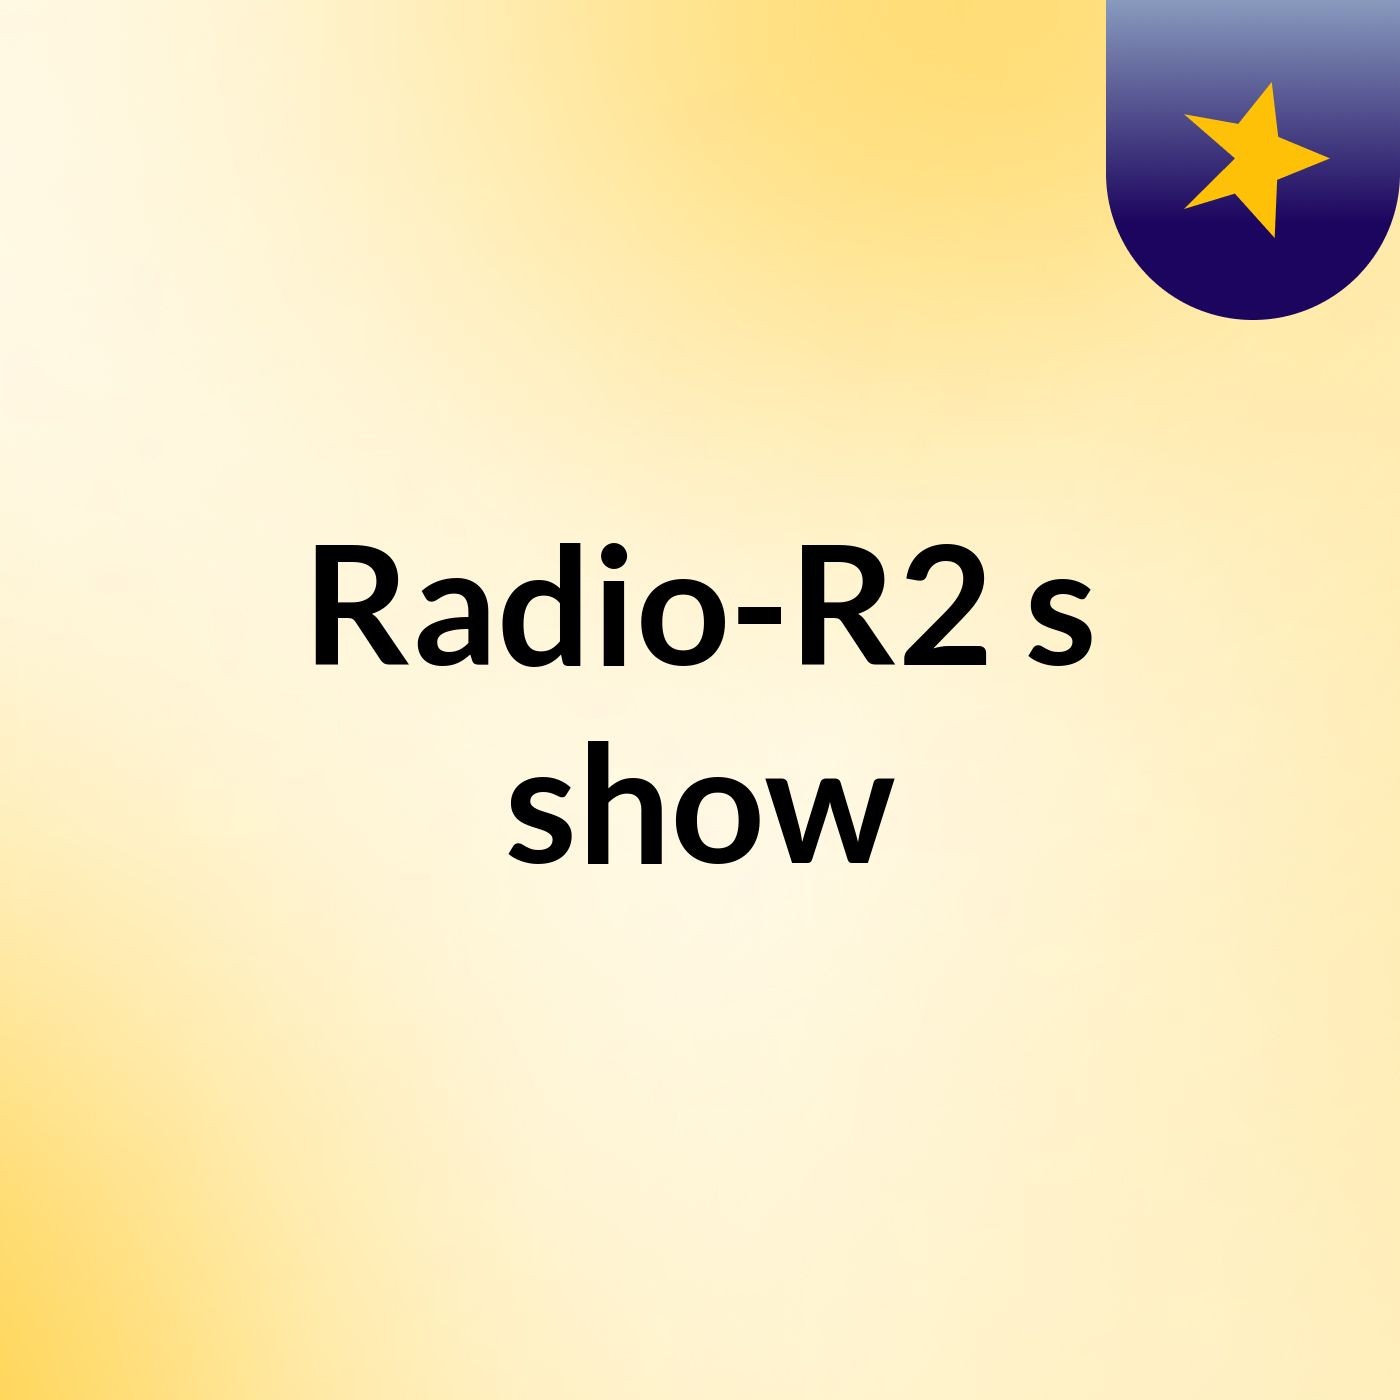 Radio-R2's show